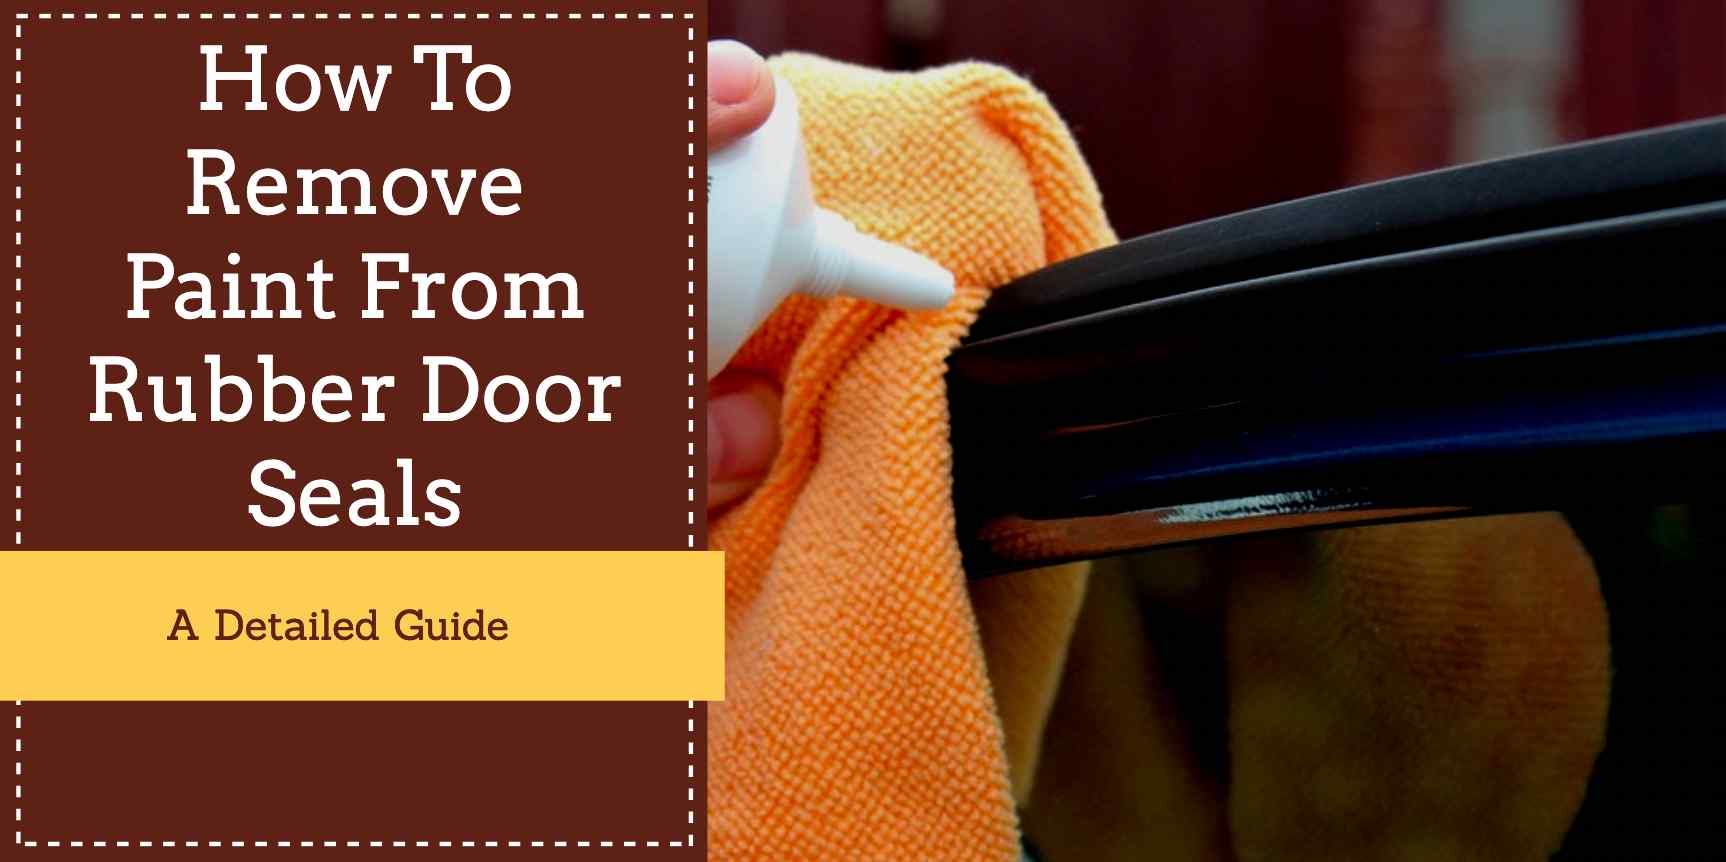 How to remove paint from rubber door seals